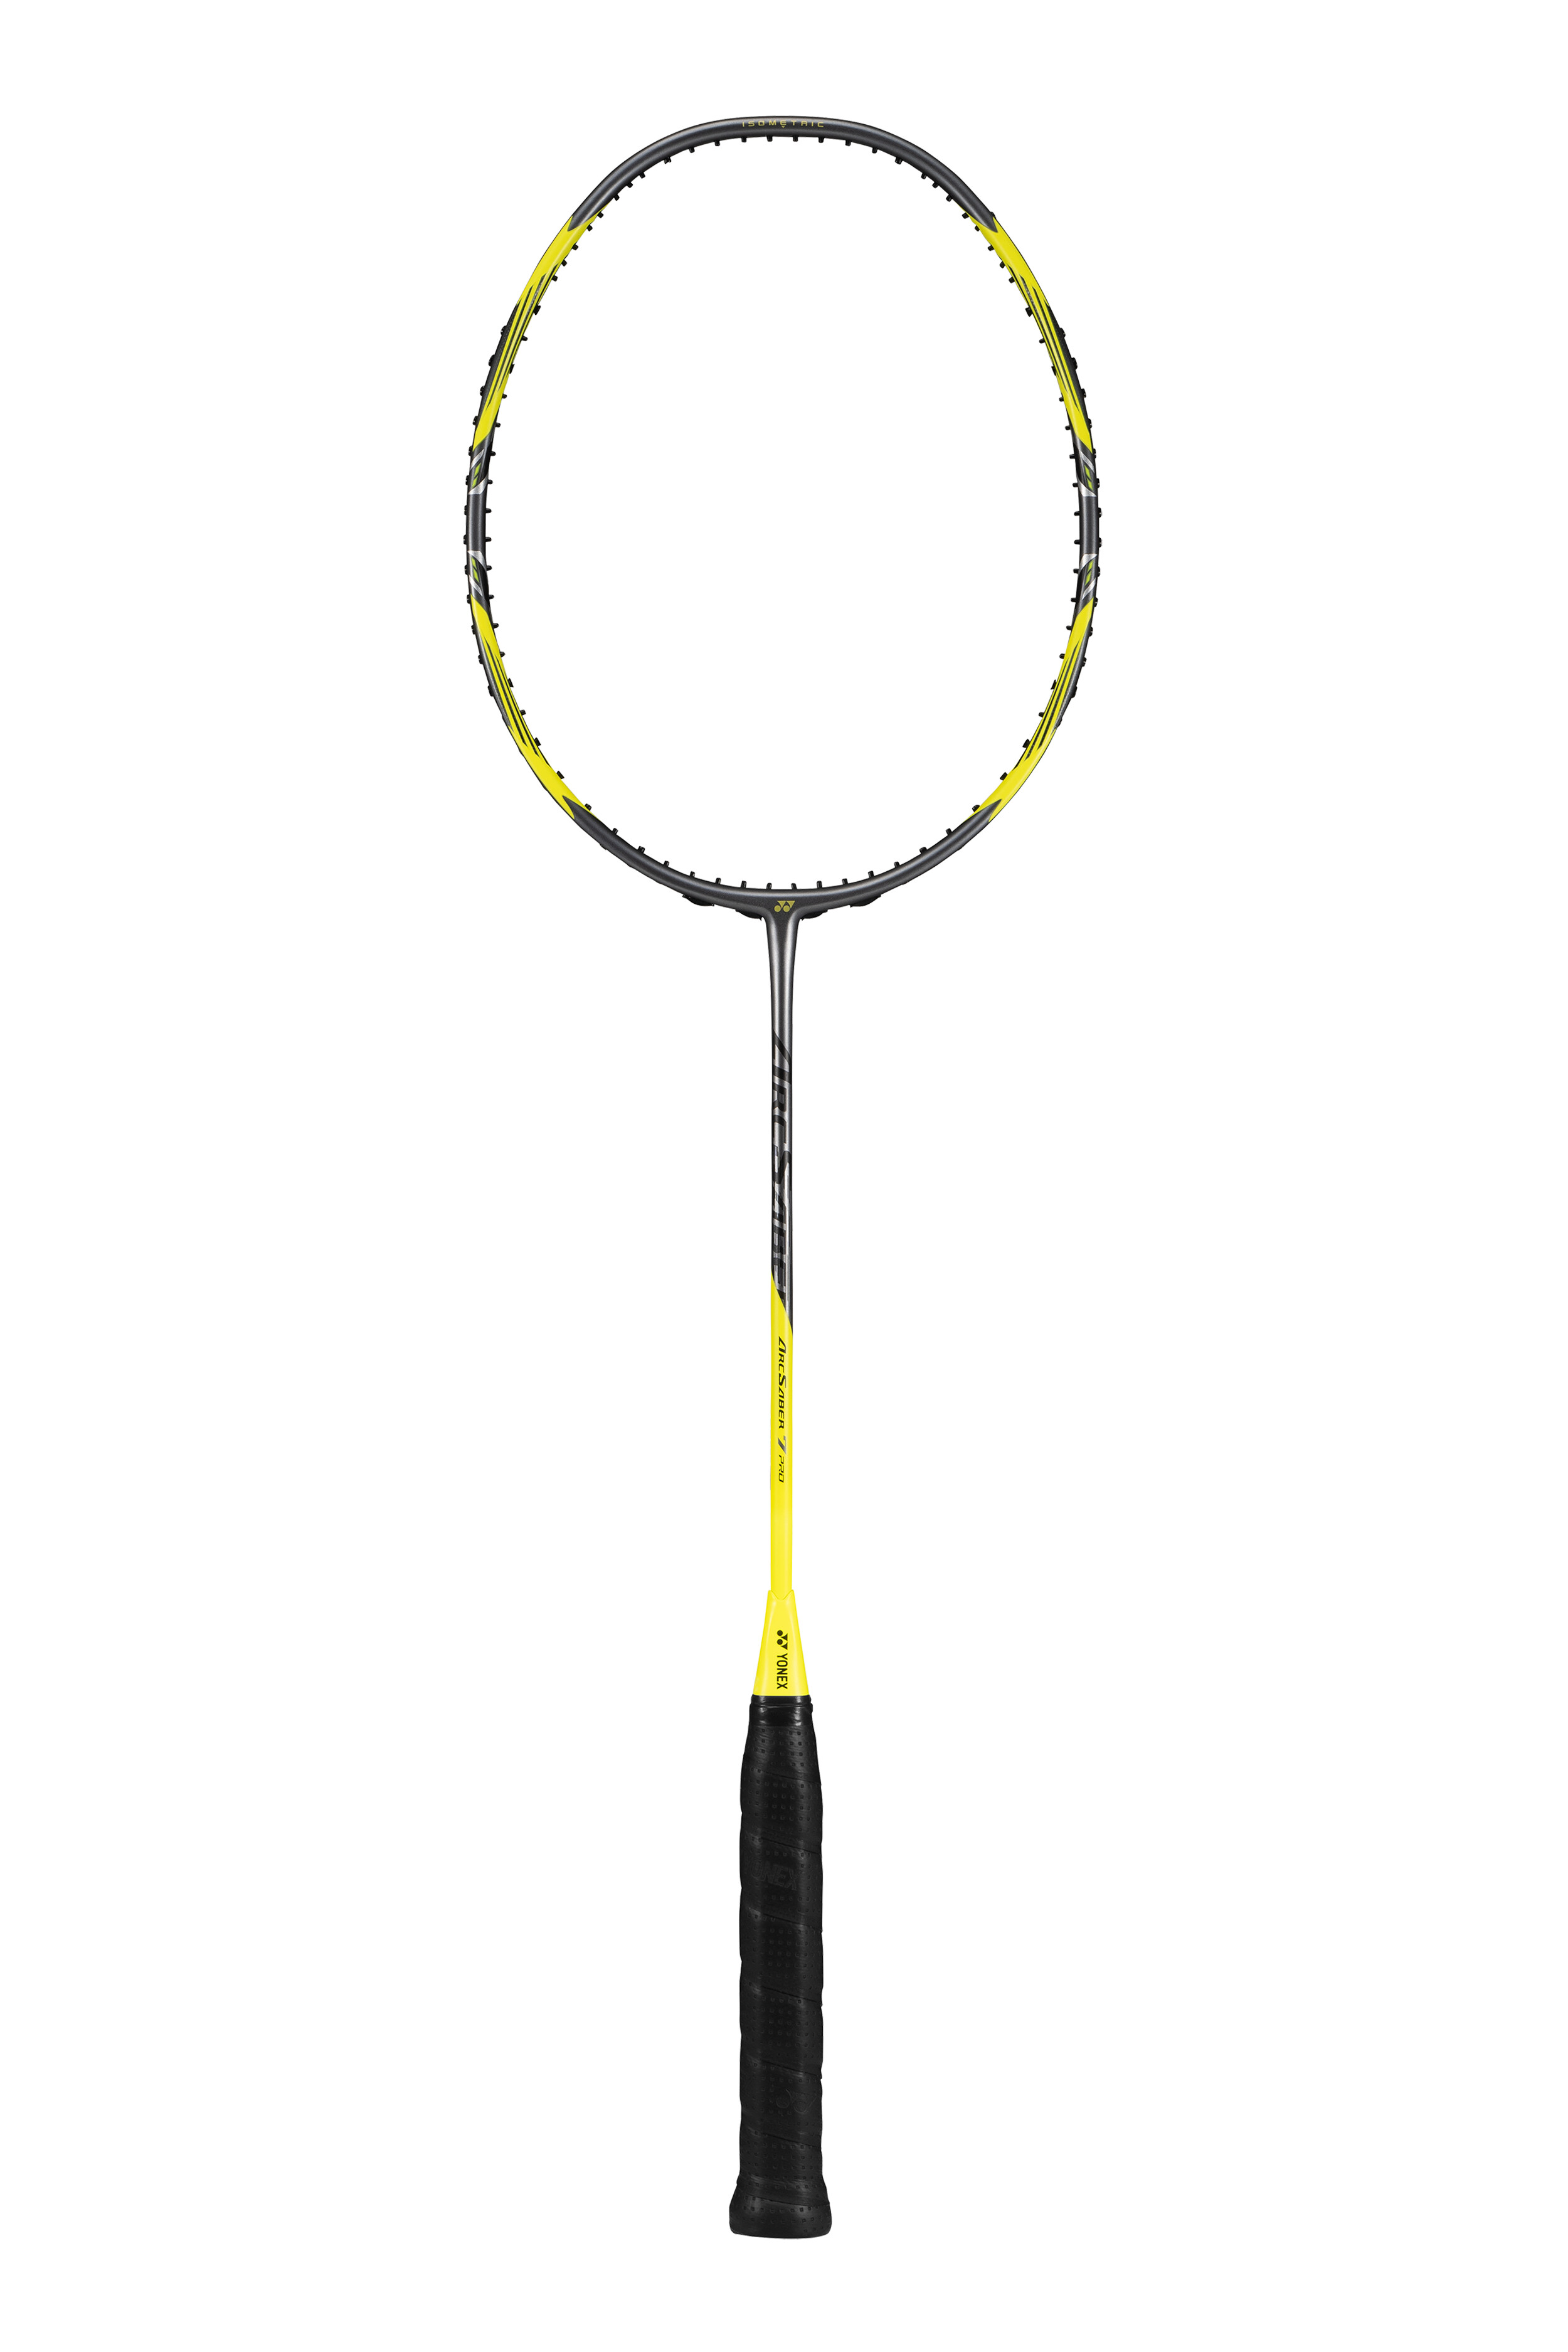 YONEX Arcsaber 7 PRO Badminton Racquet (Gray/Yellow) Unstrung ARC7-P Made in Japan